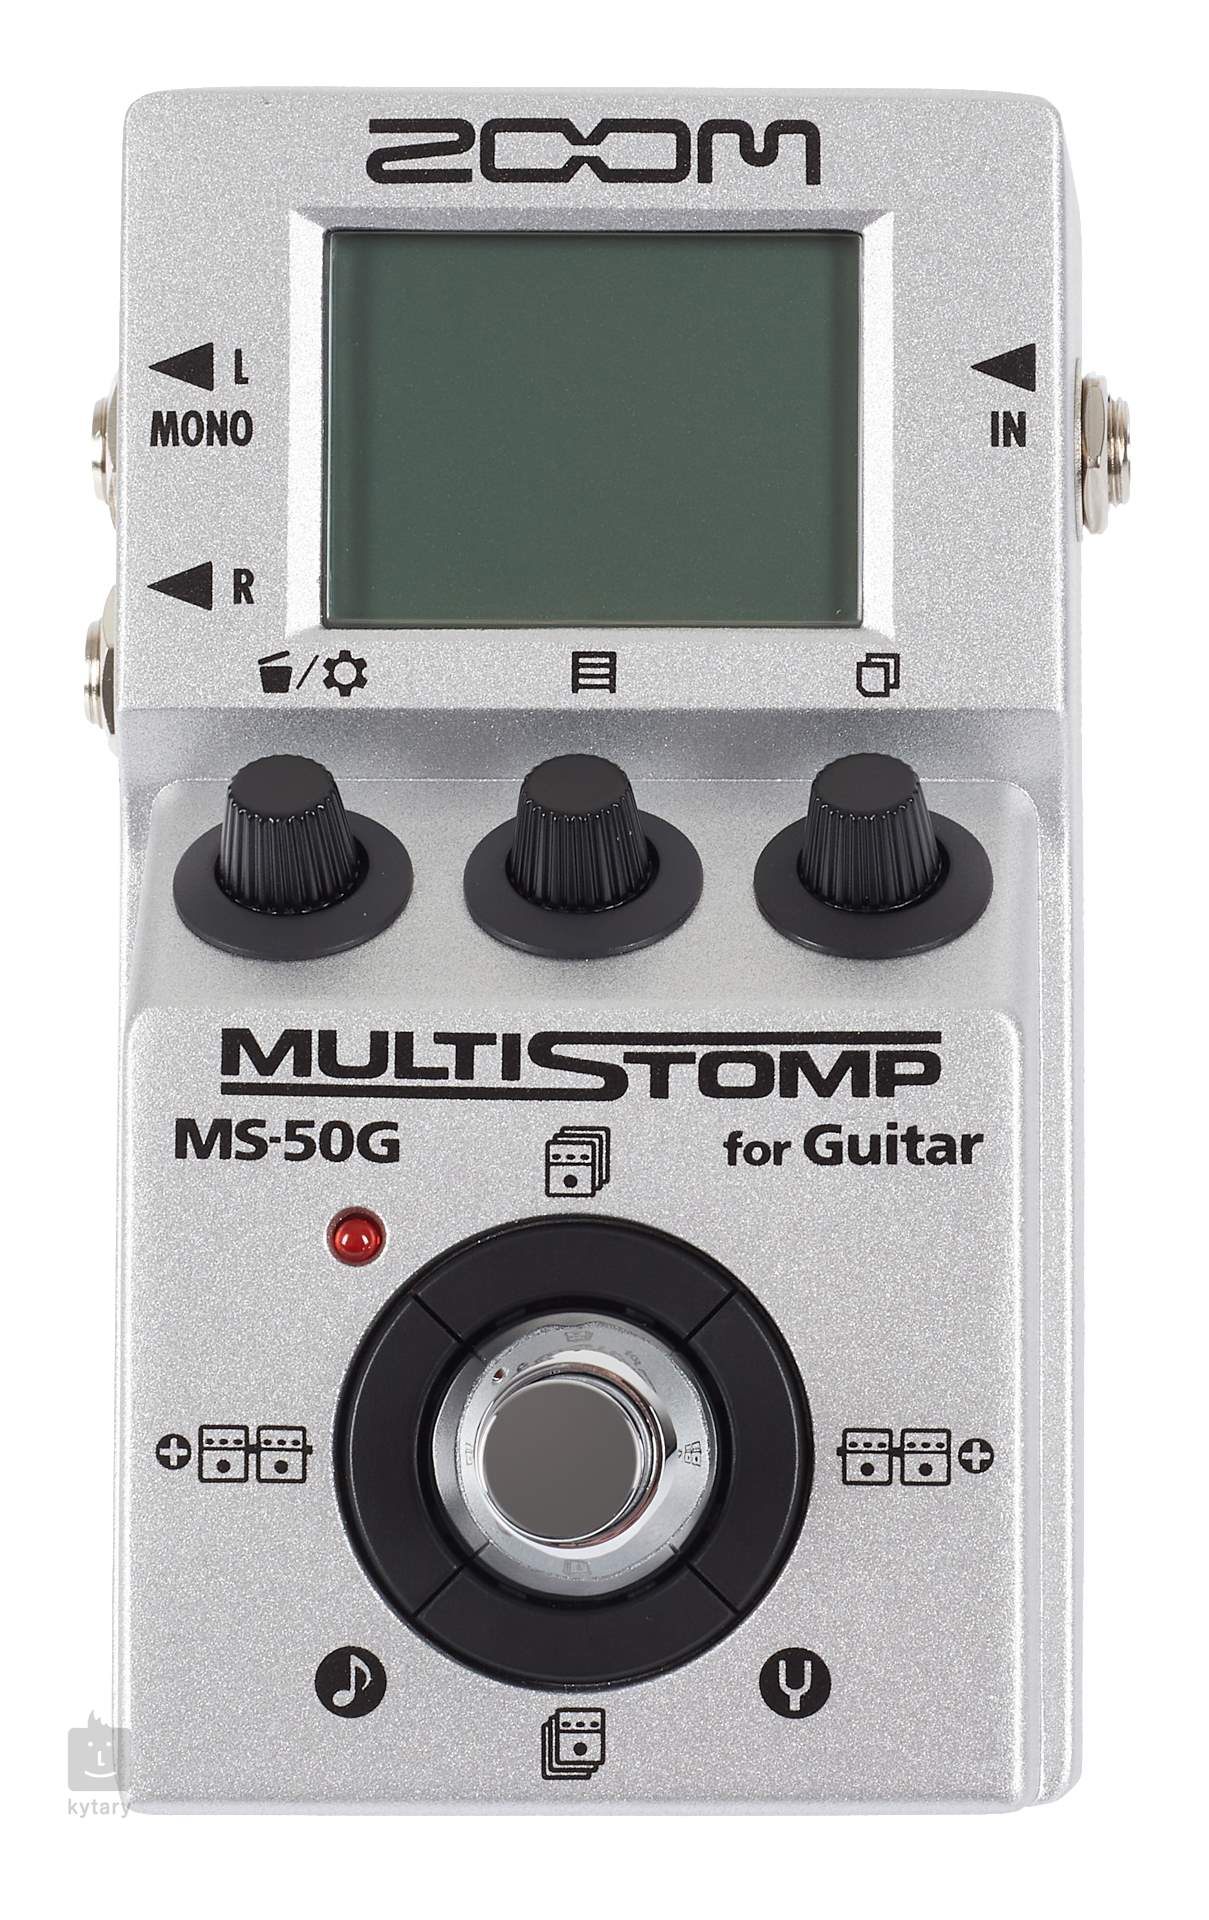 MULTI STOMP MS-50G for Guitar - 通販 - gofukuyasan.com